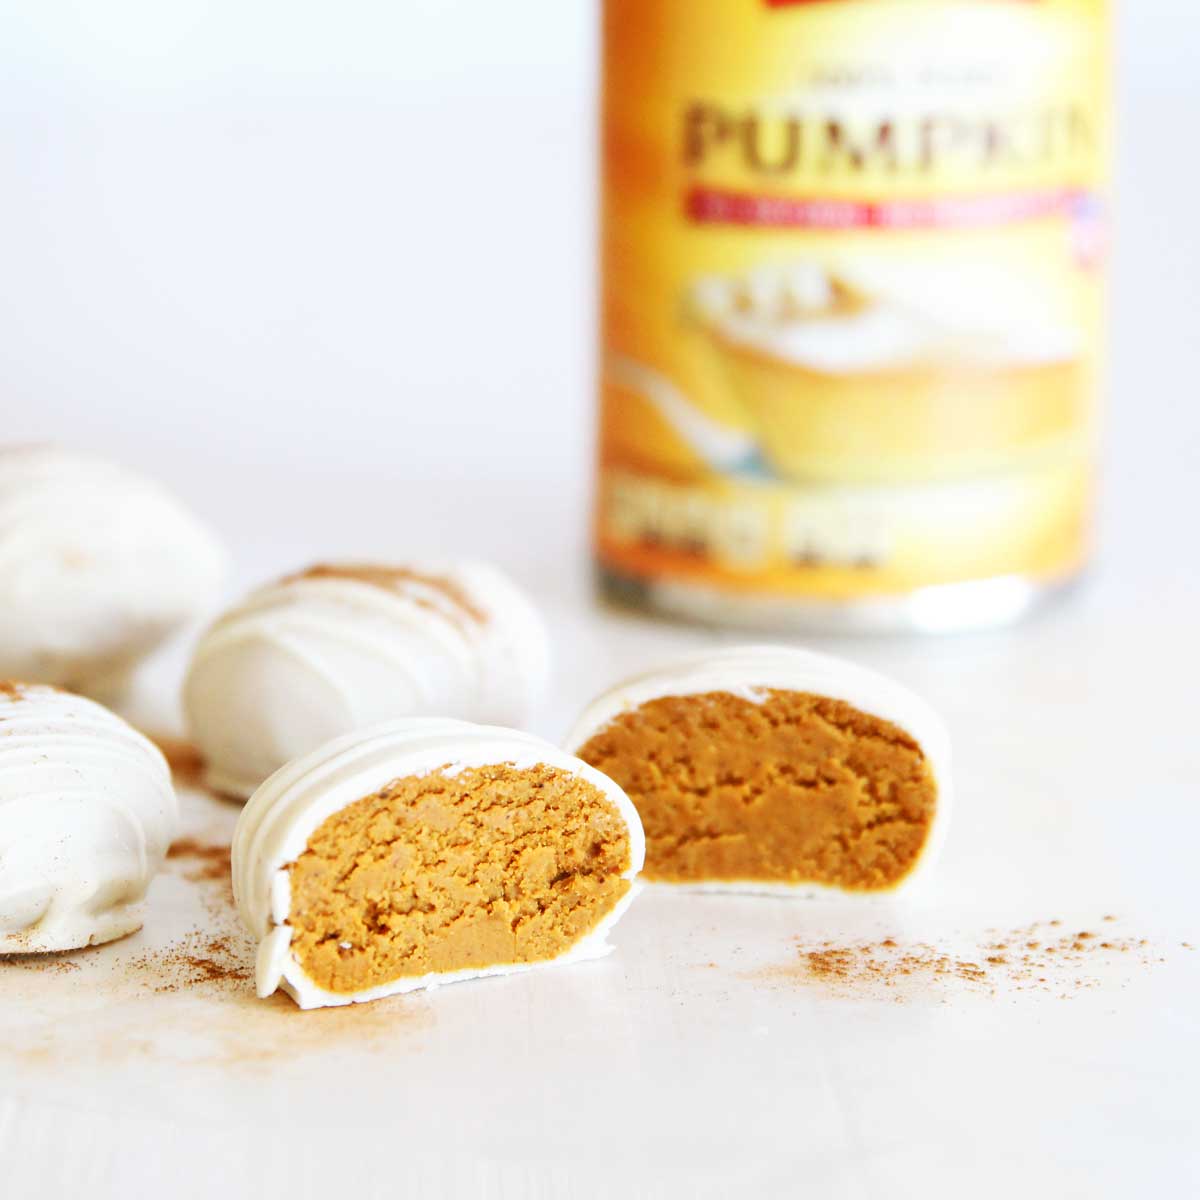 PB Fit Pumpkin Spice White Chocolate Easter Eggs (4-Ingredient Vegan Recipe!) - Peanut Butter Easter Eggs